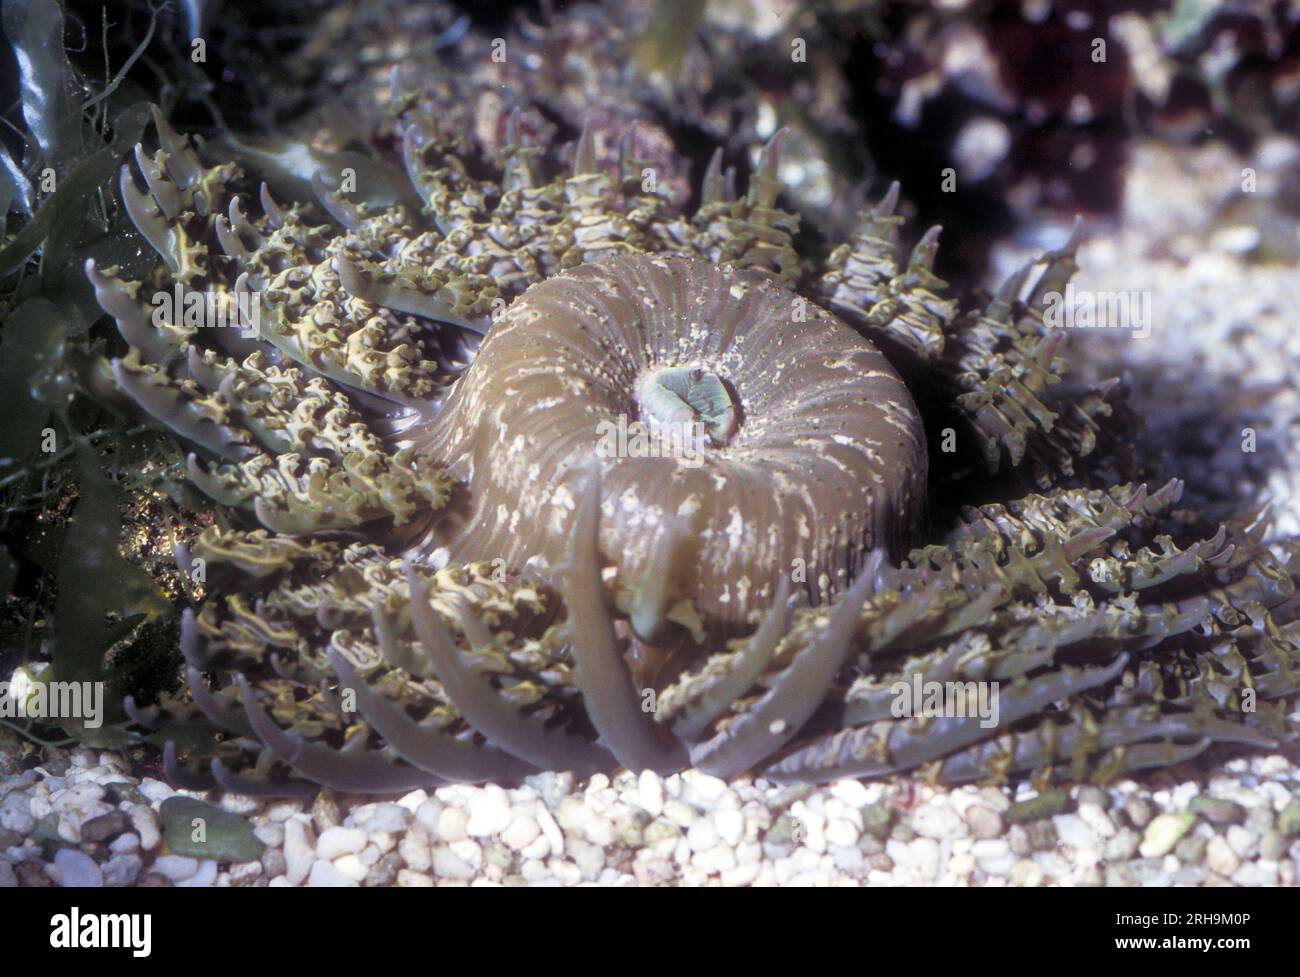 Rock anemone (Phymanthus sp.). Aquariumphoto. Stock Photo